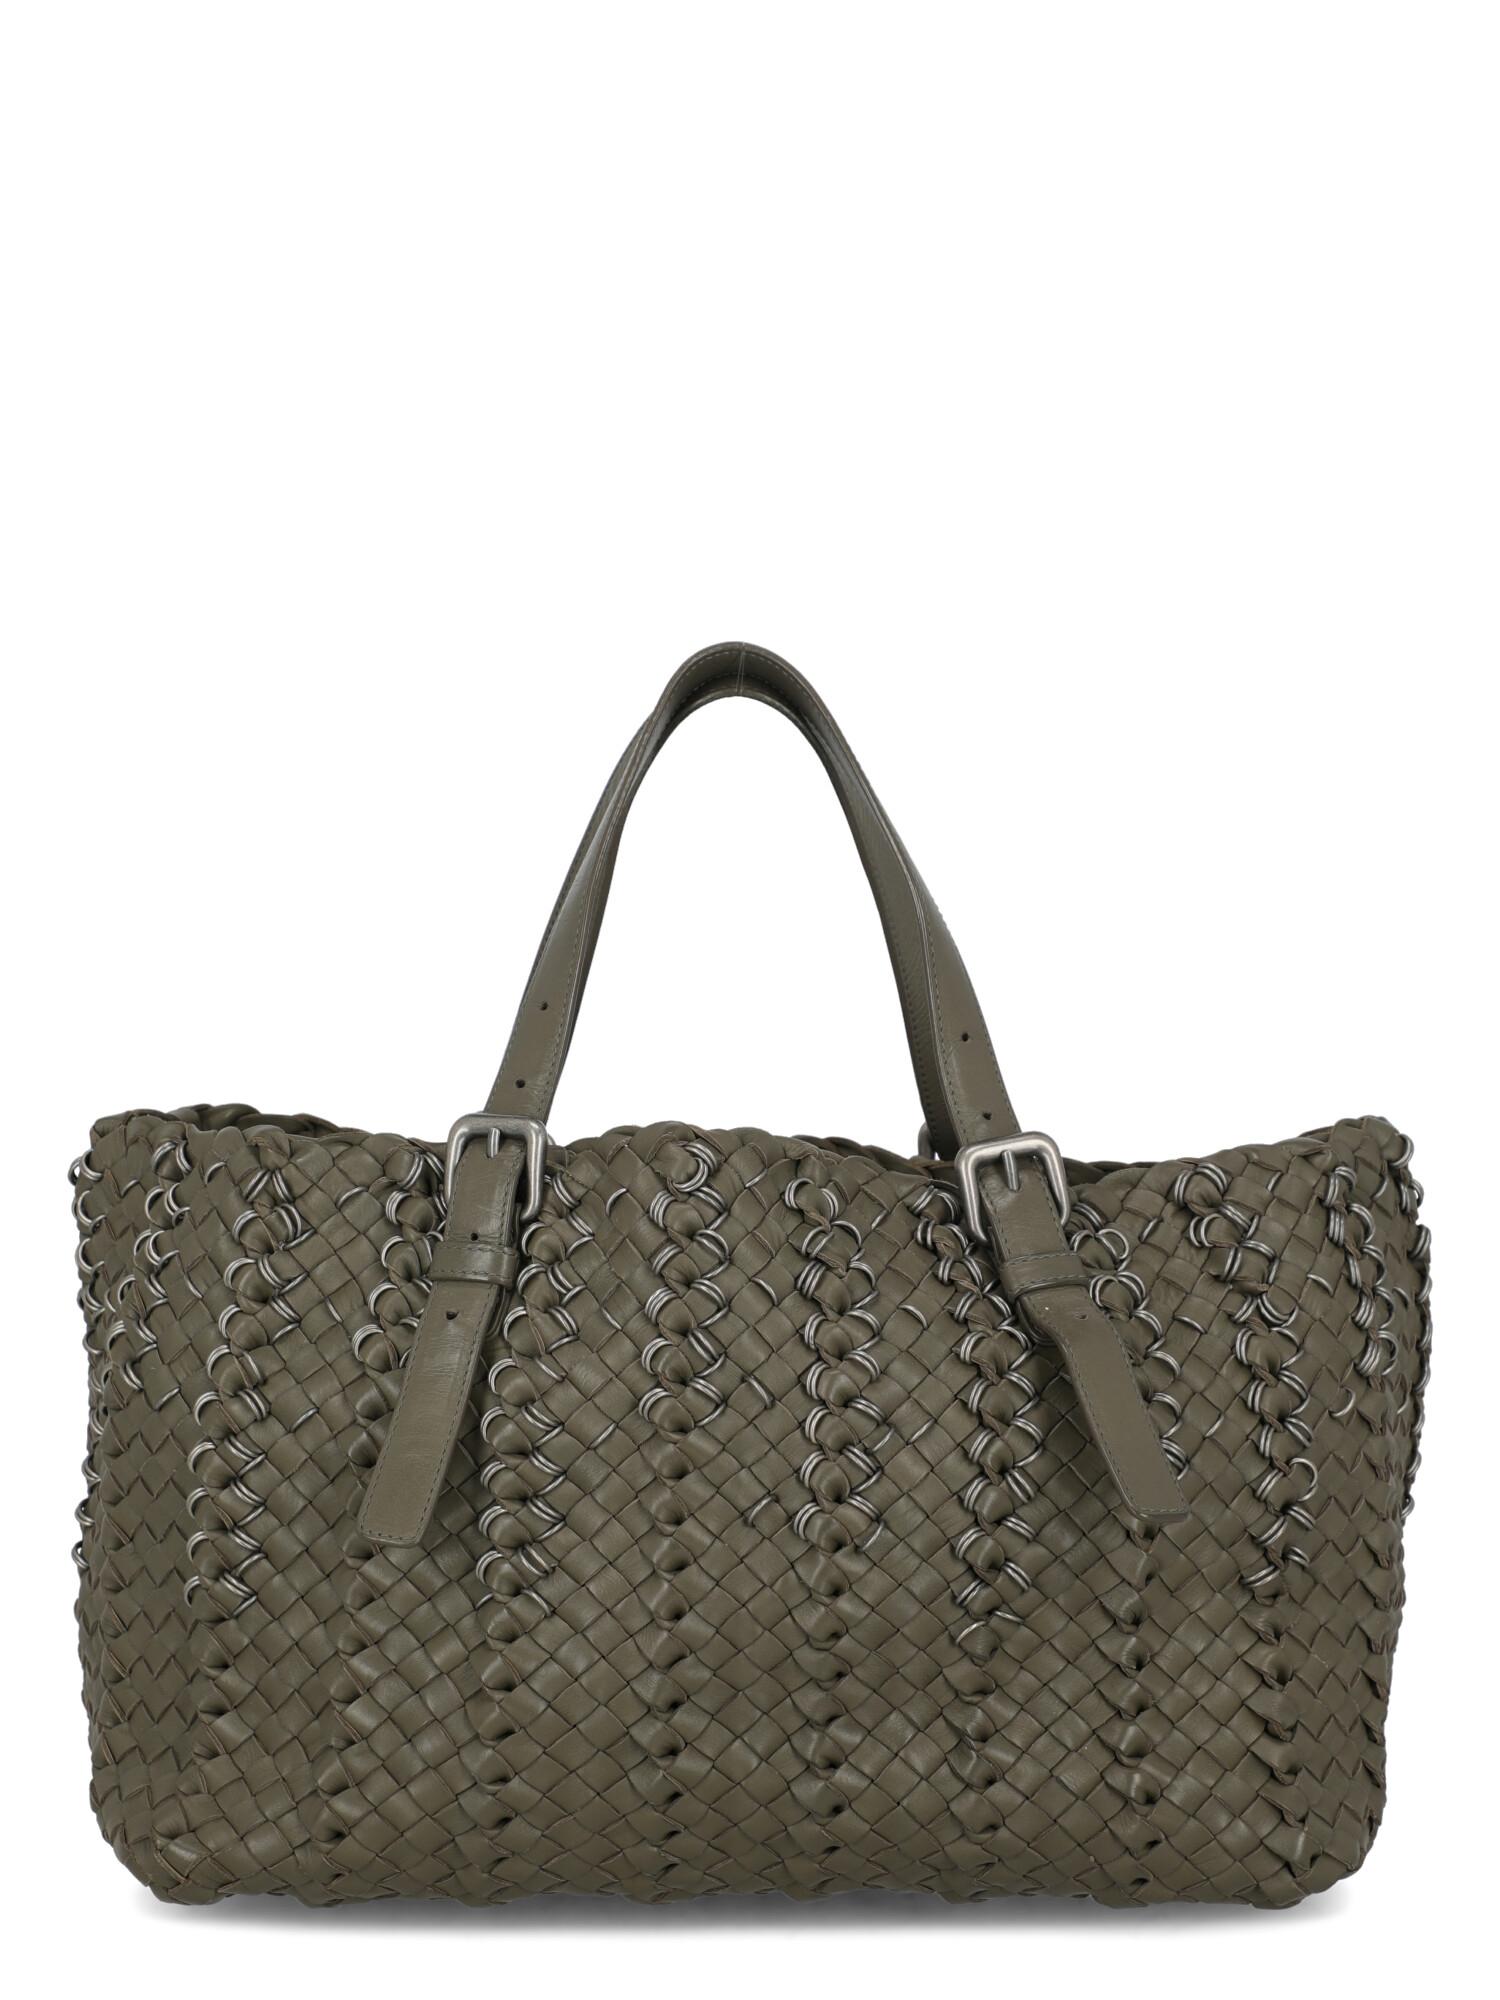 Bottega Veneta Women's Handbag Grey Leather In Good Condition For Sale In Milan, IT